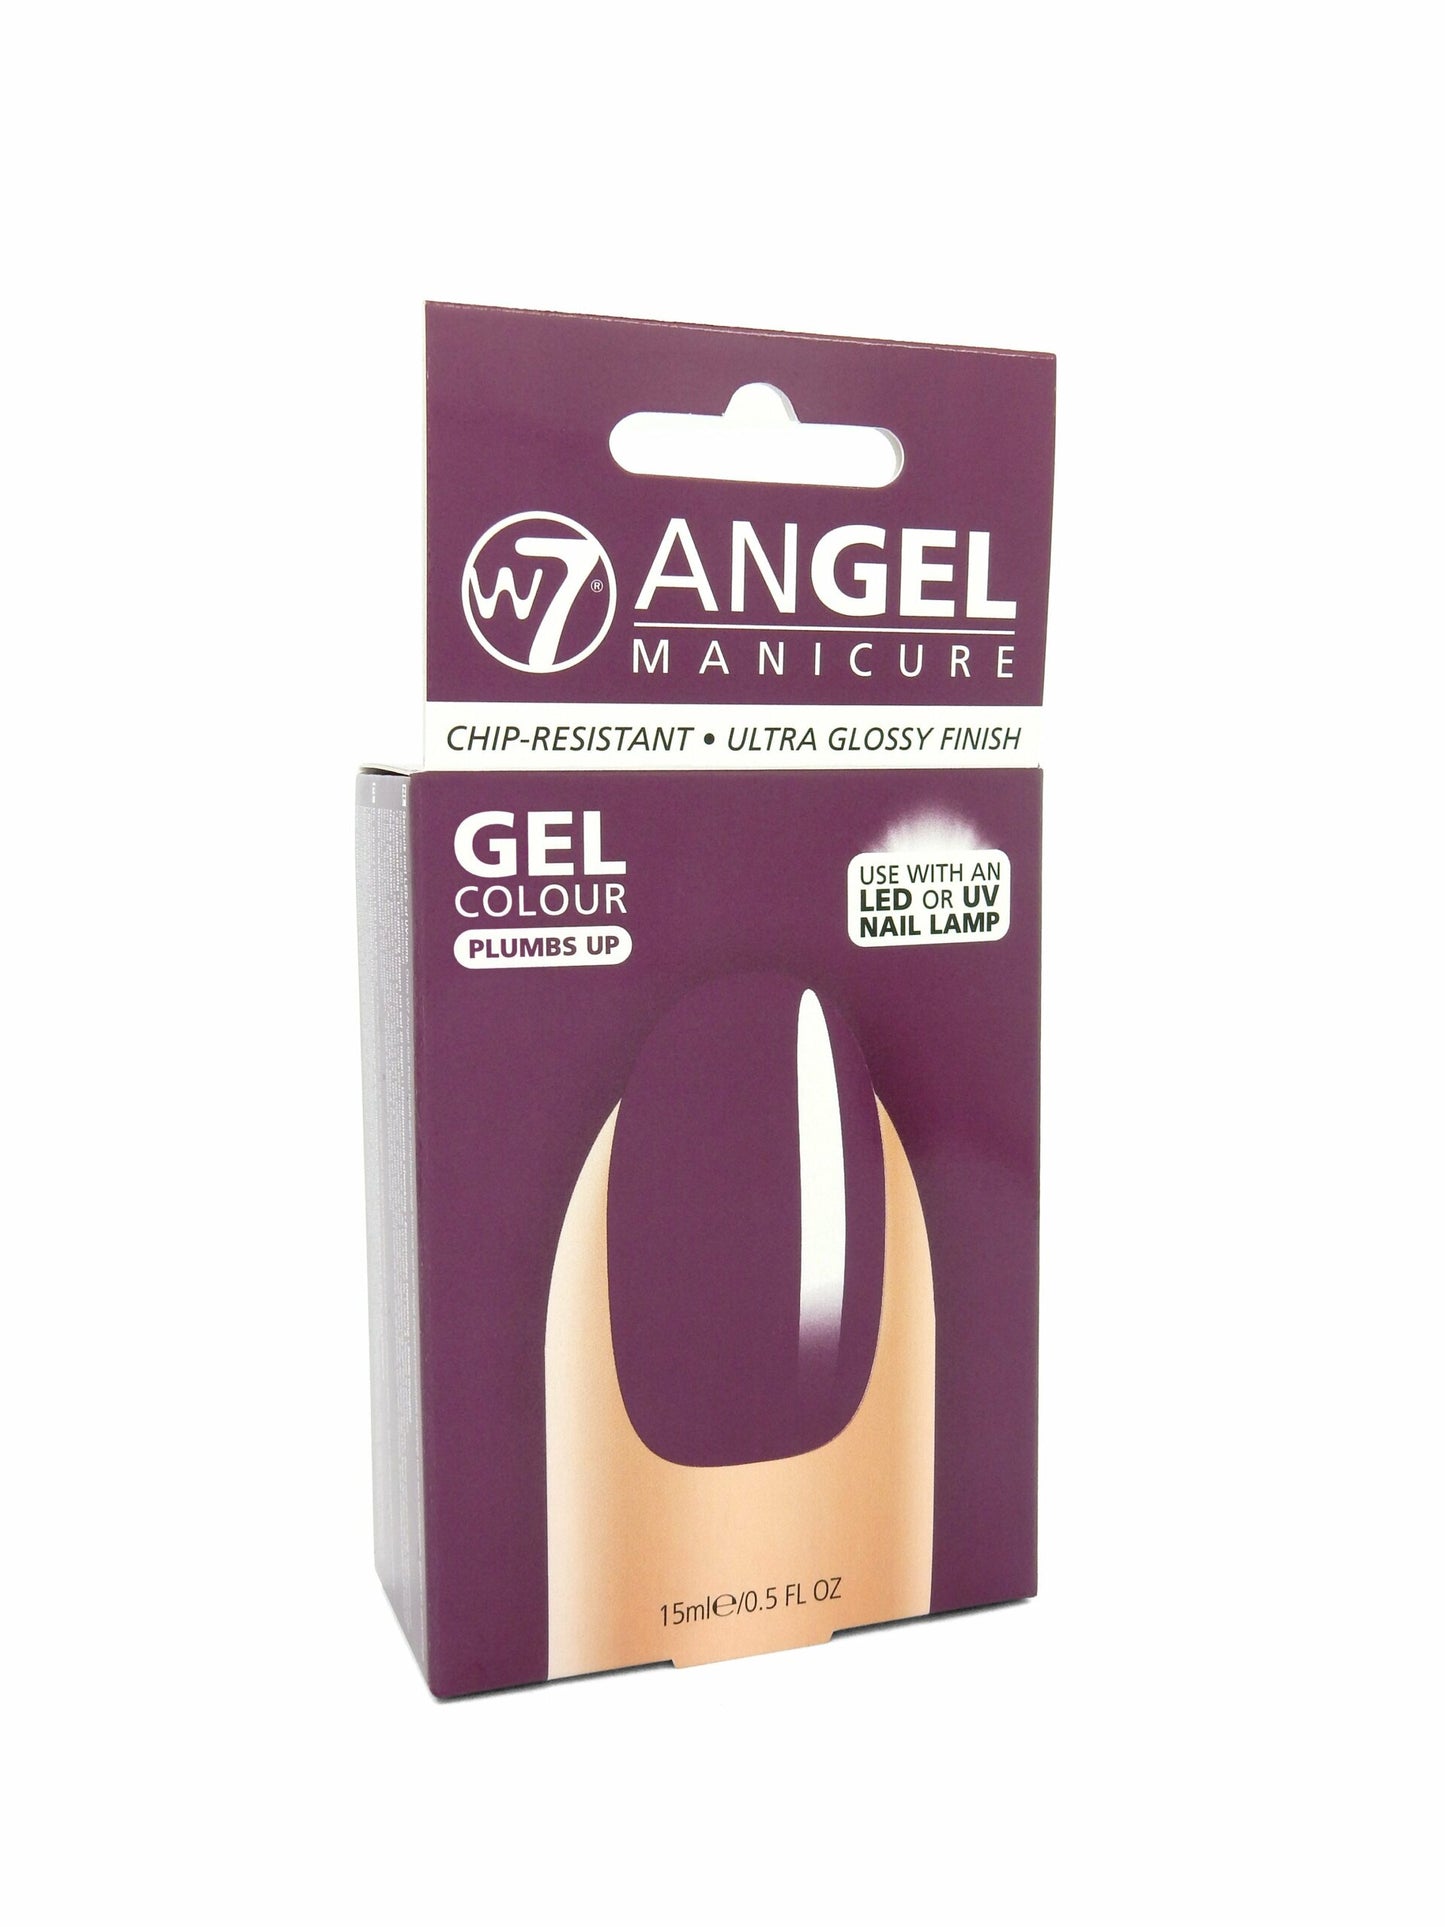 W7 Angel Manicure Nail Polish Plumbs Up